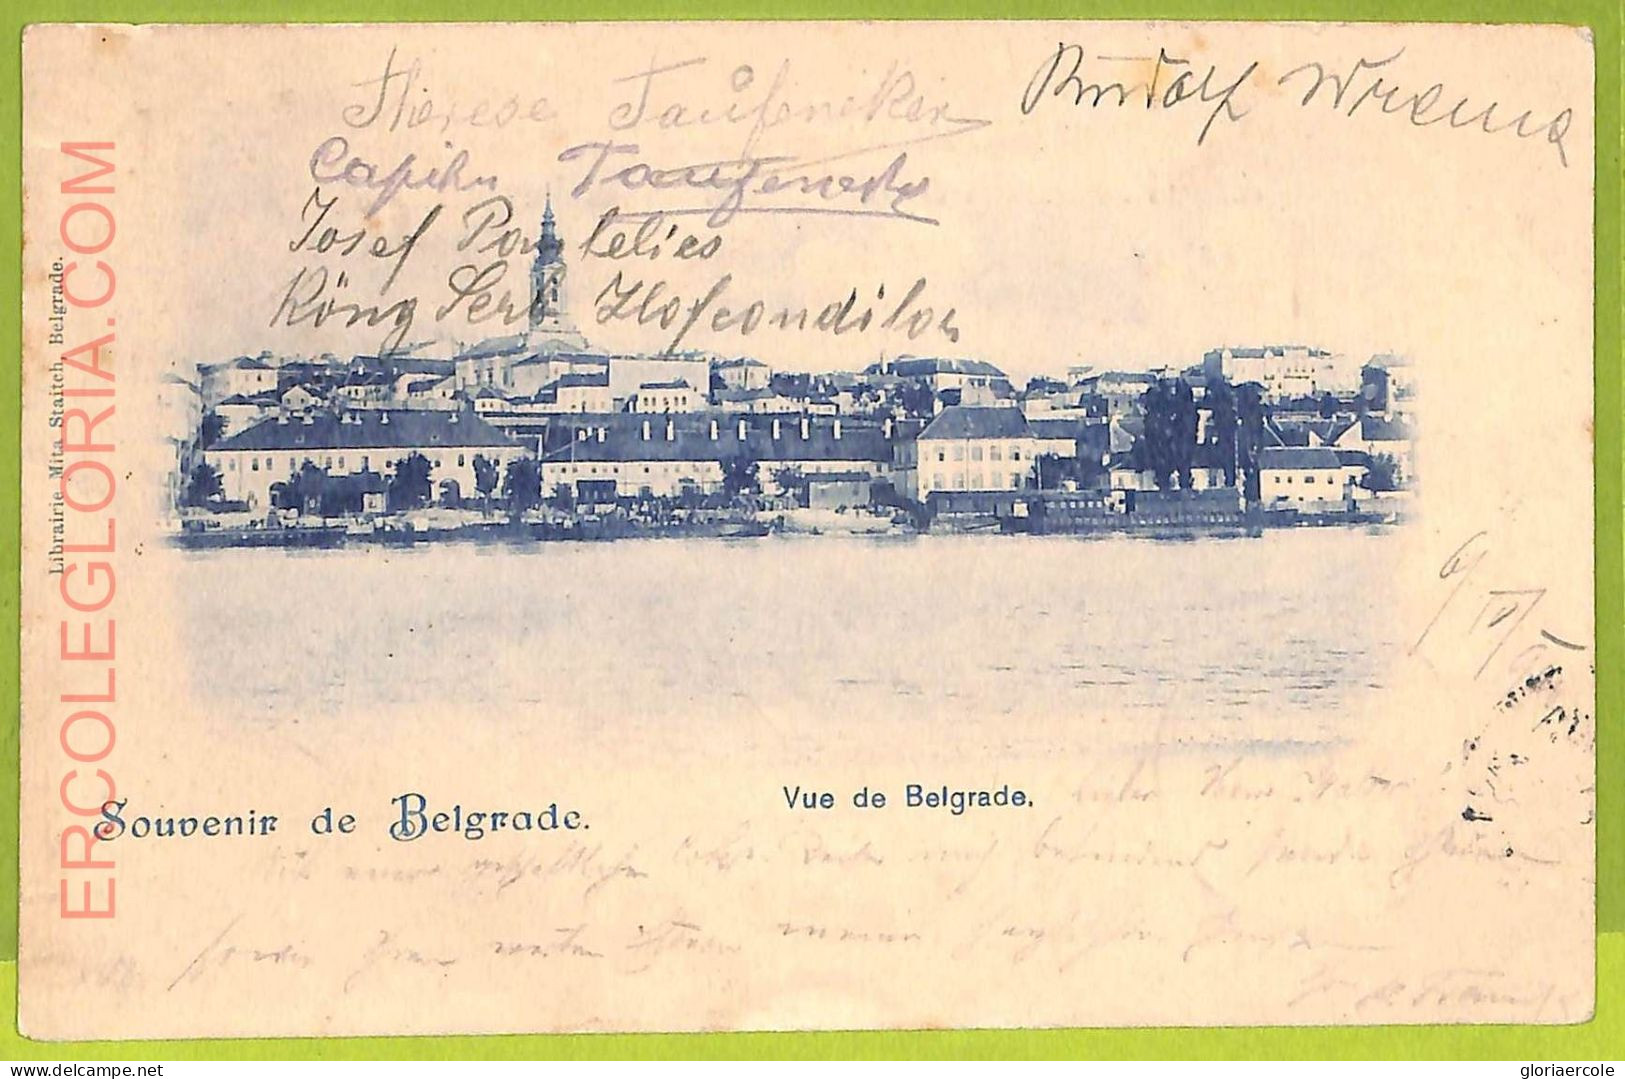 Ae8886 - Ansichtskarten VINTAGE POSTCARD - SERBIA - Belgrade Бео́град - 1900 - Serbia